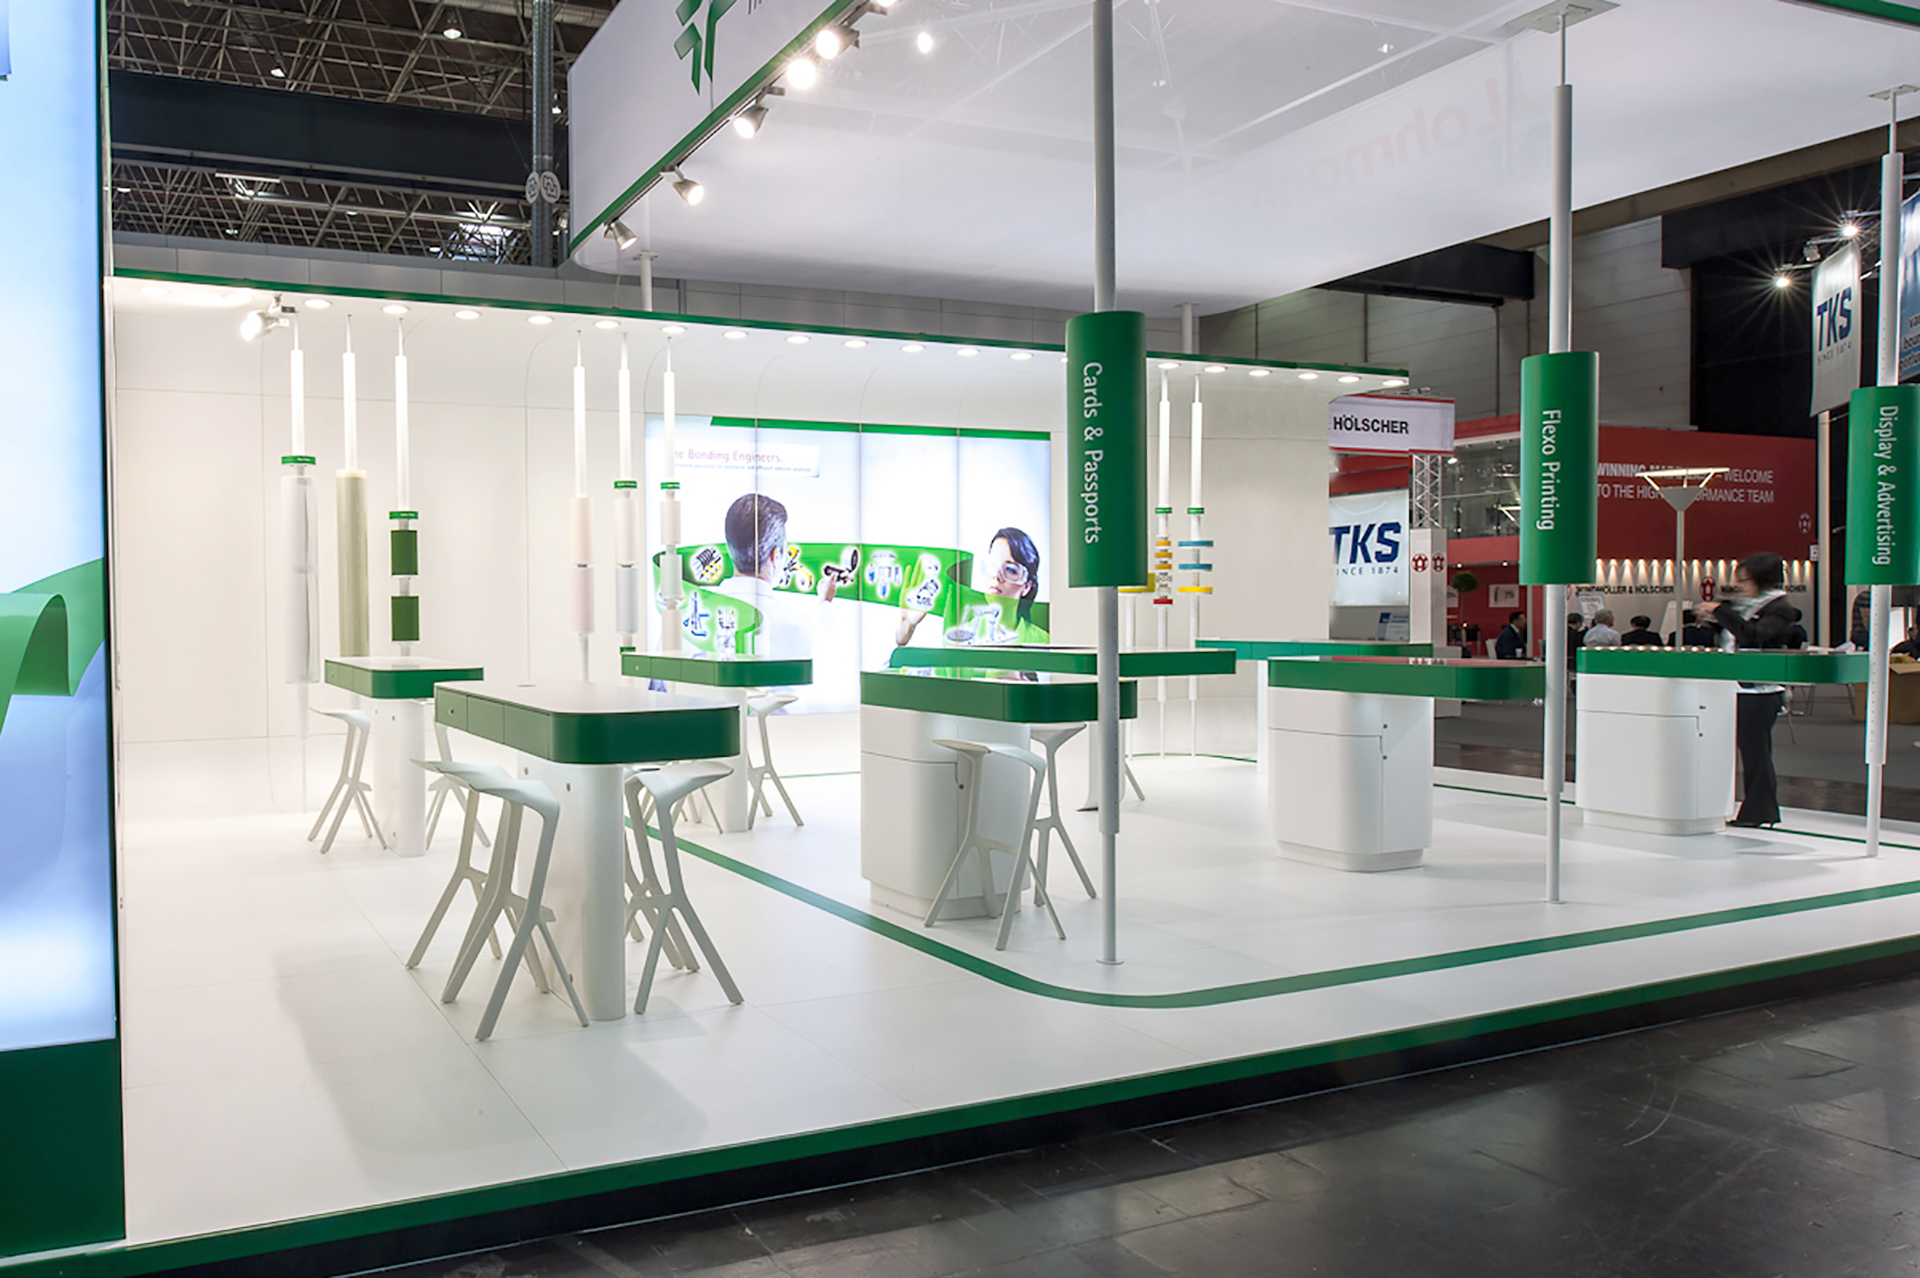 photo Lohmann trade fair booth modular design green white